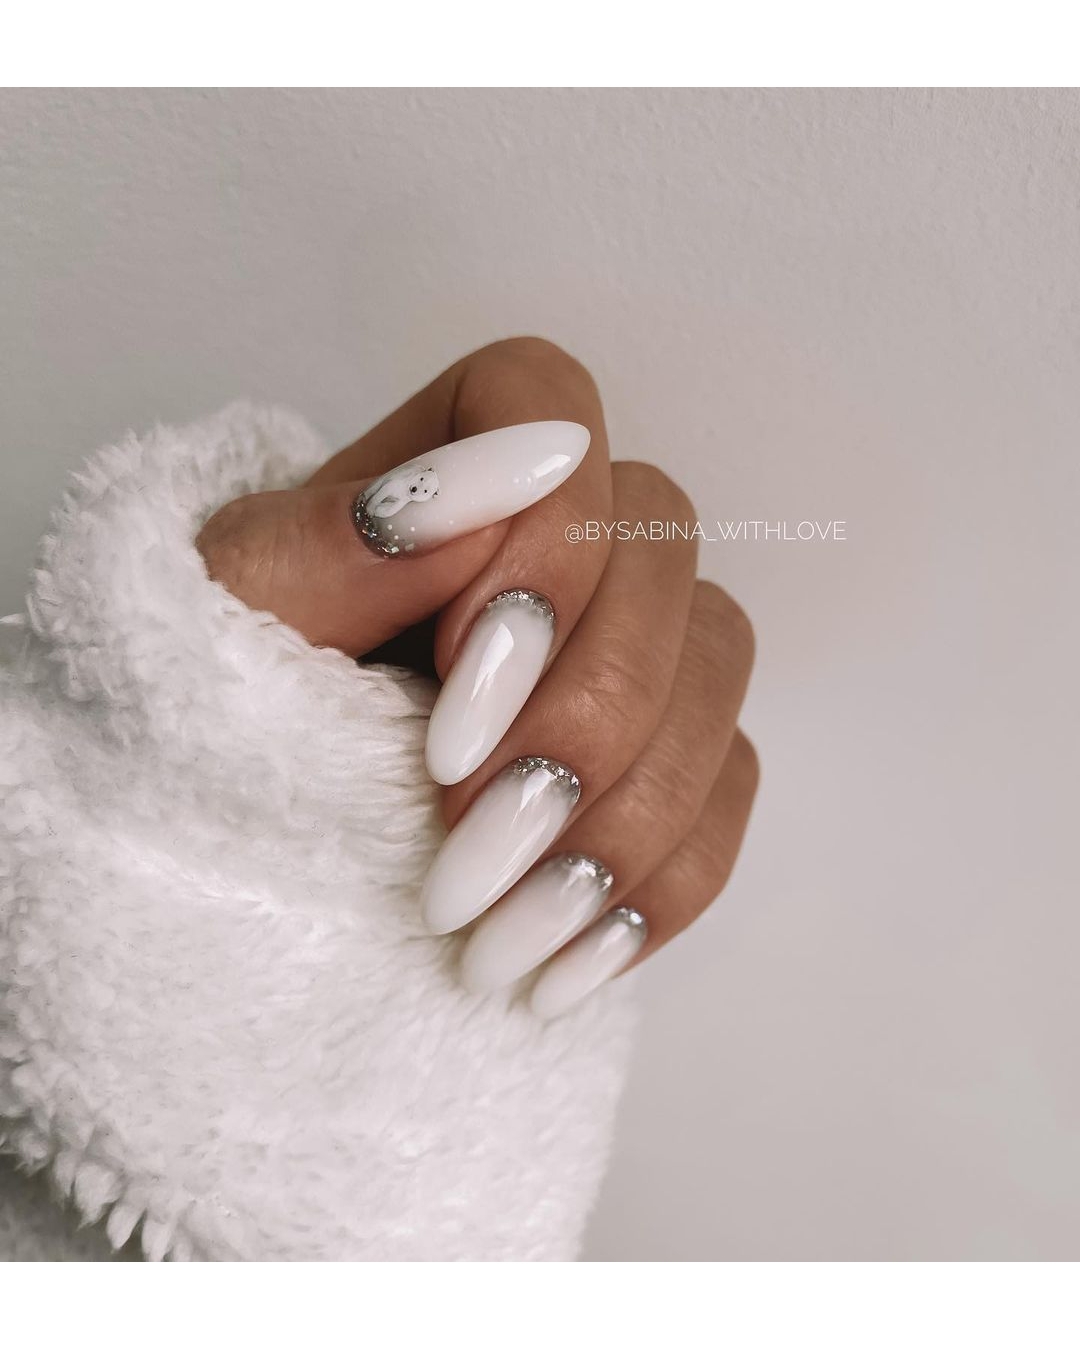 Unghie bianche con brillantini argento - @bysabina_withlove